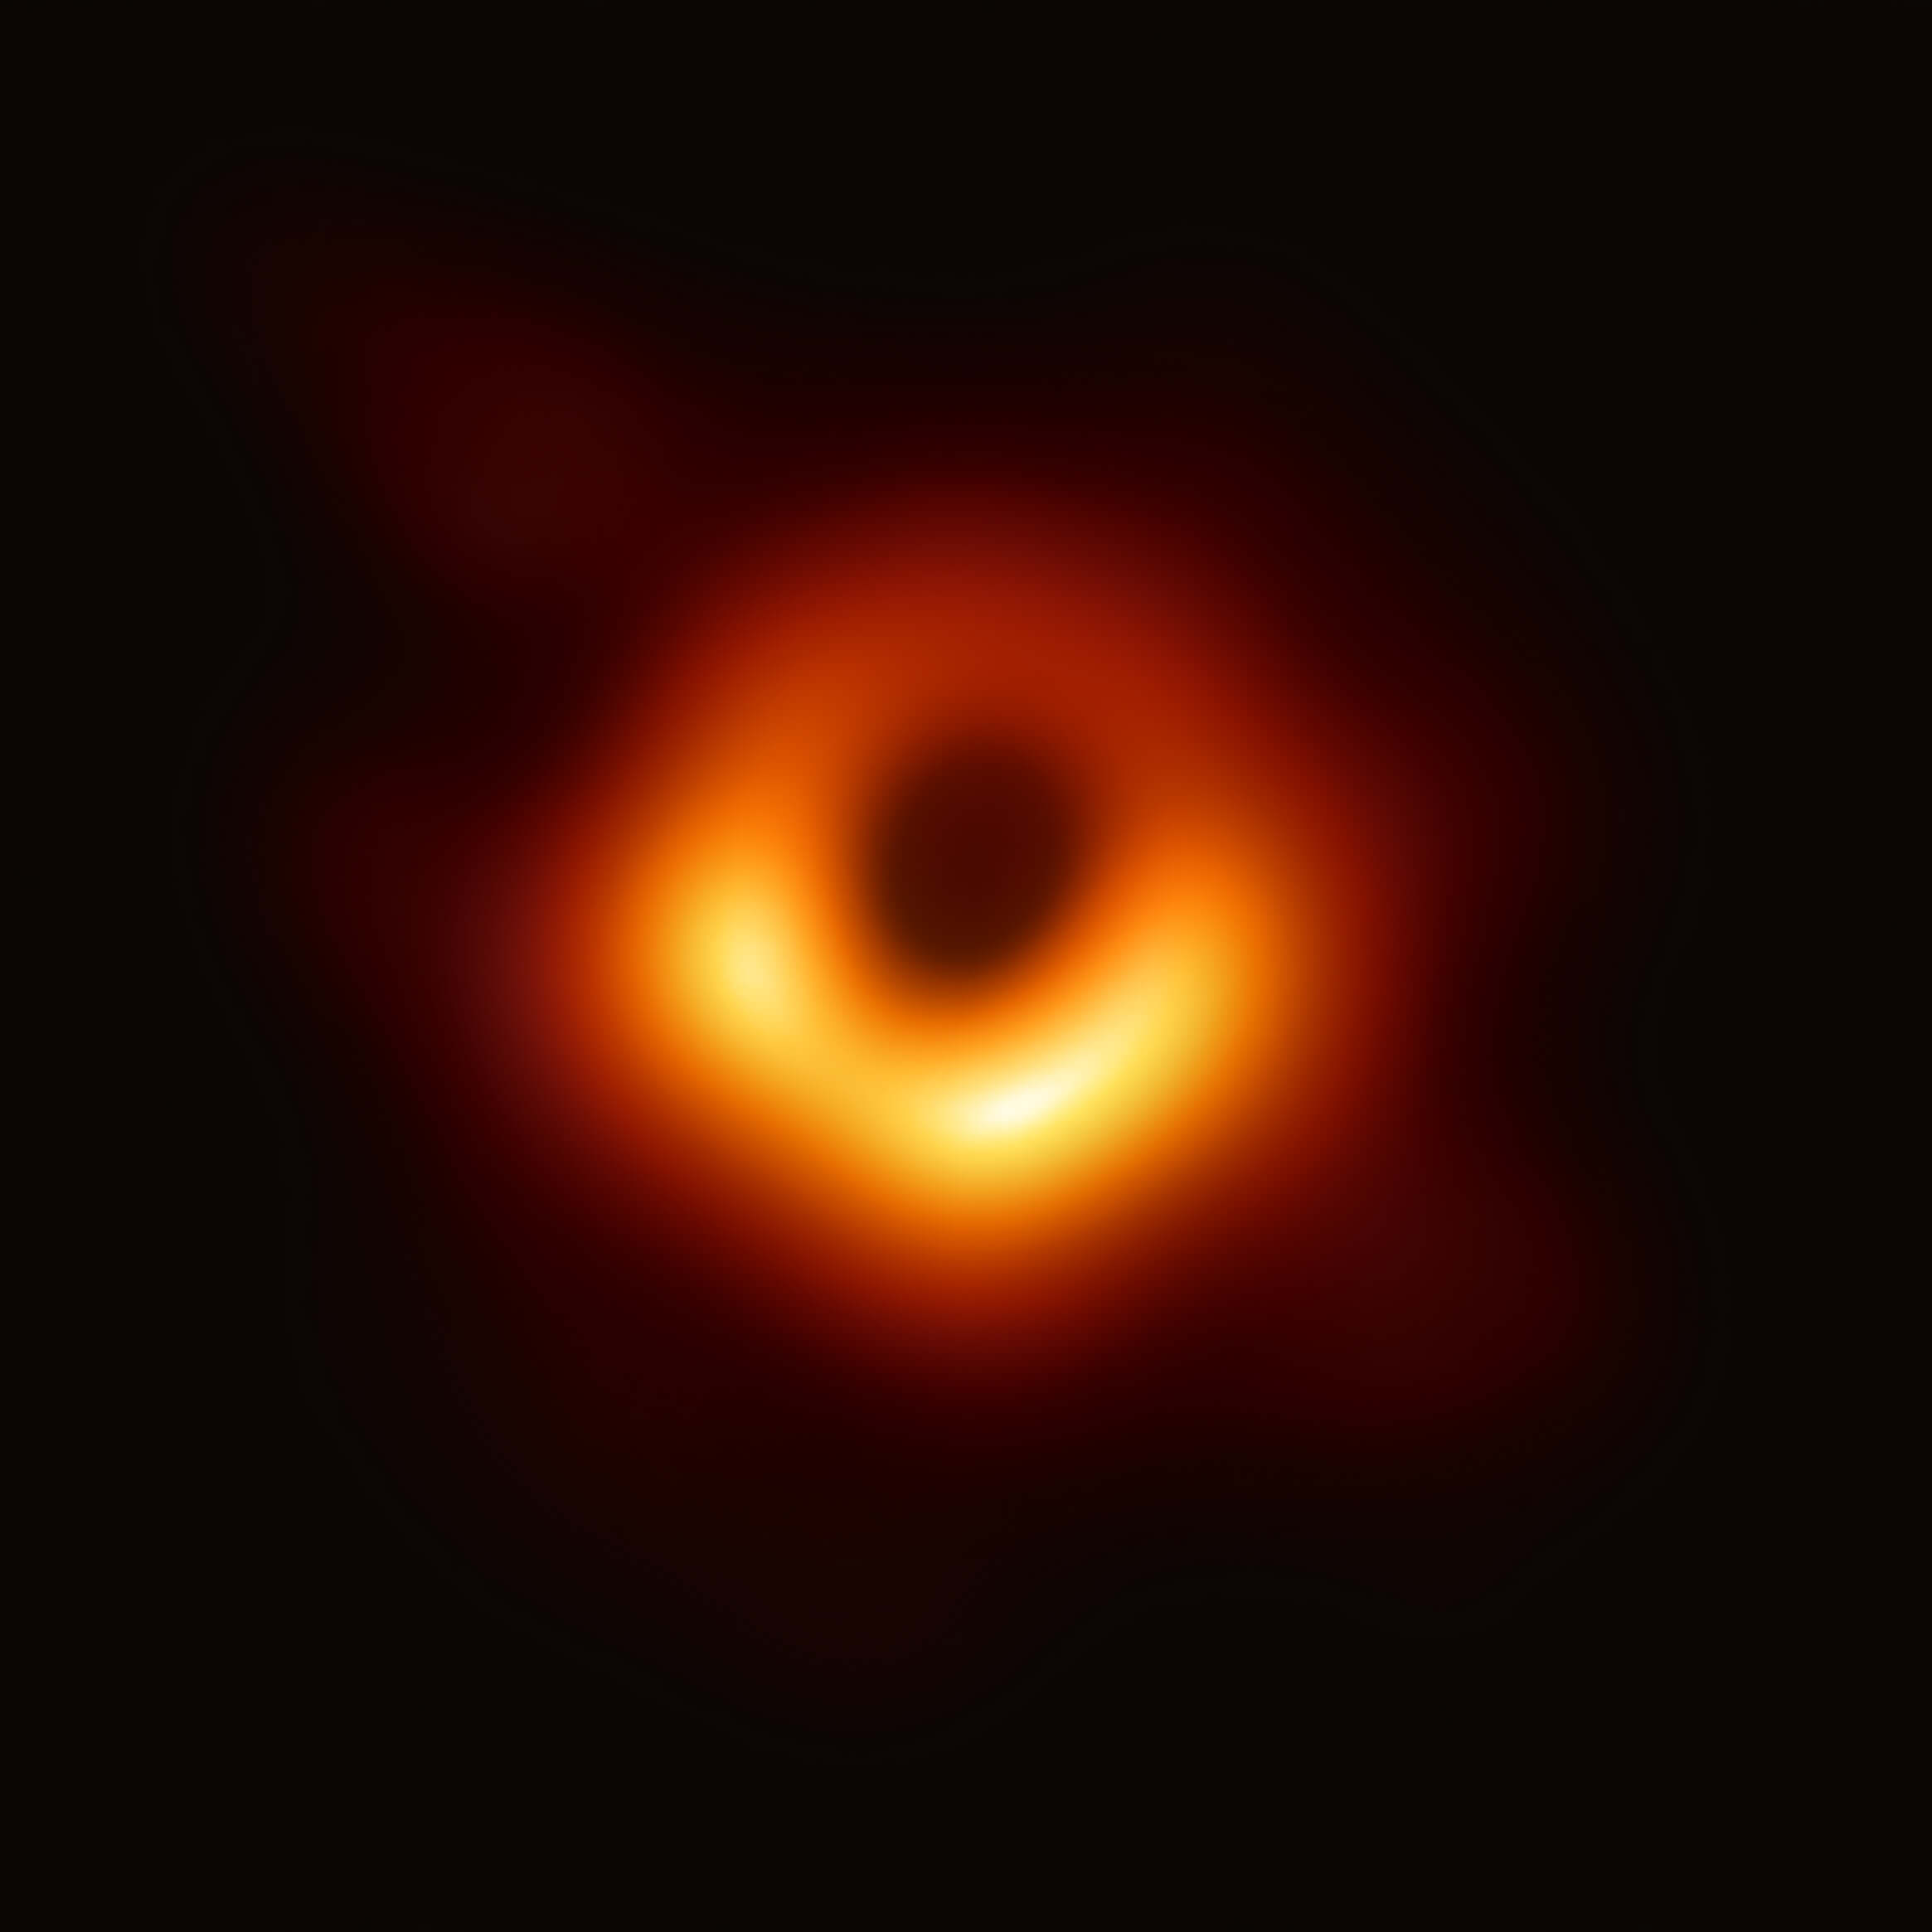 Agujero negro ©Event Horizon Telescope